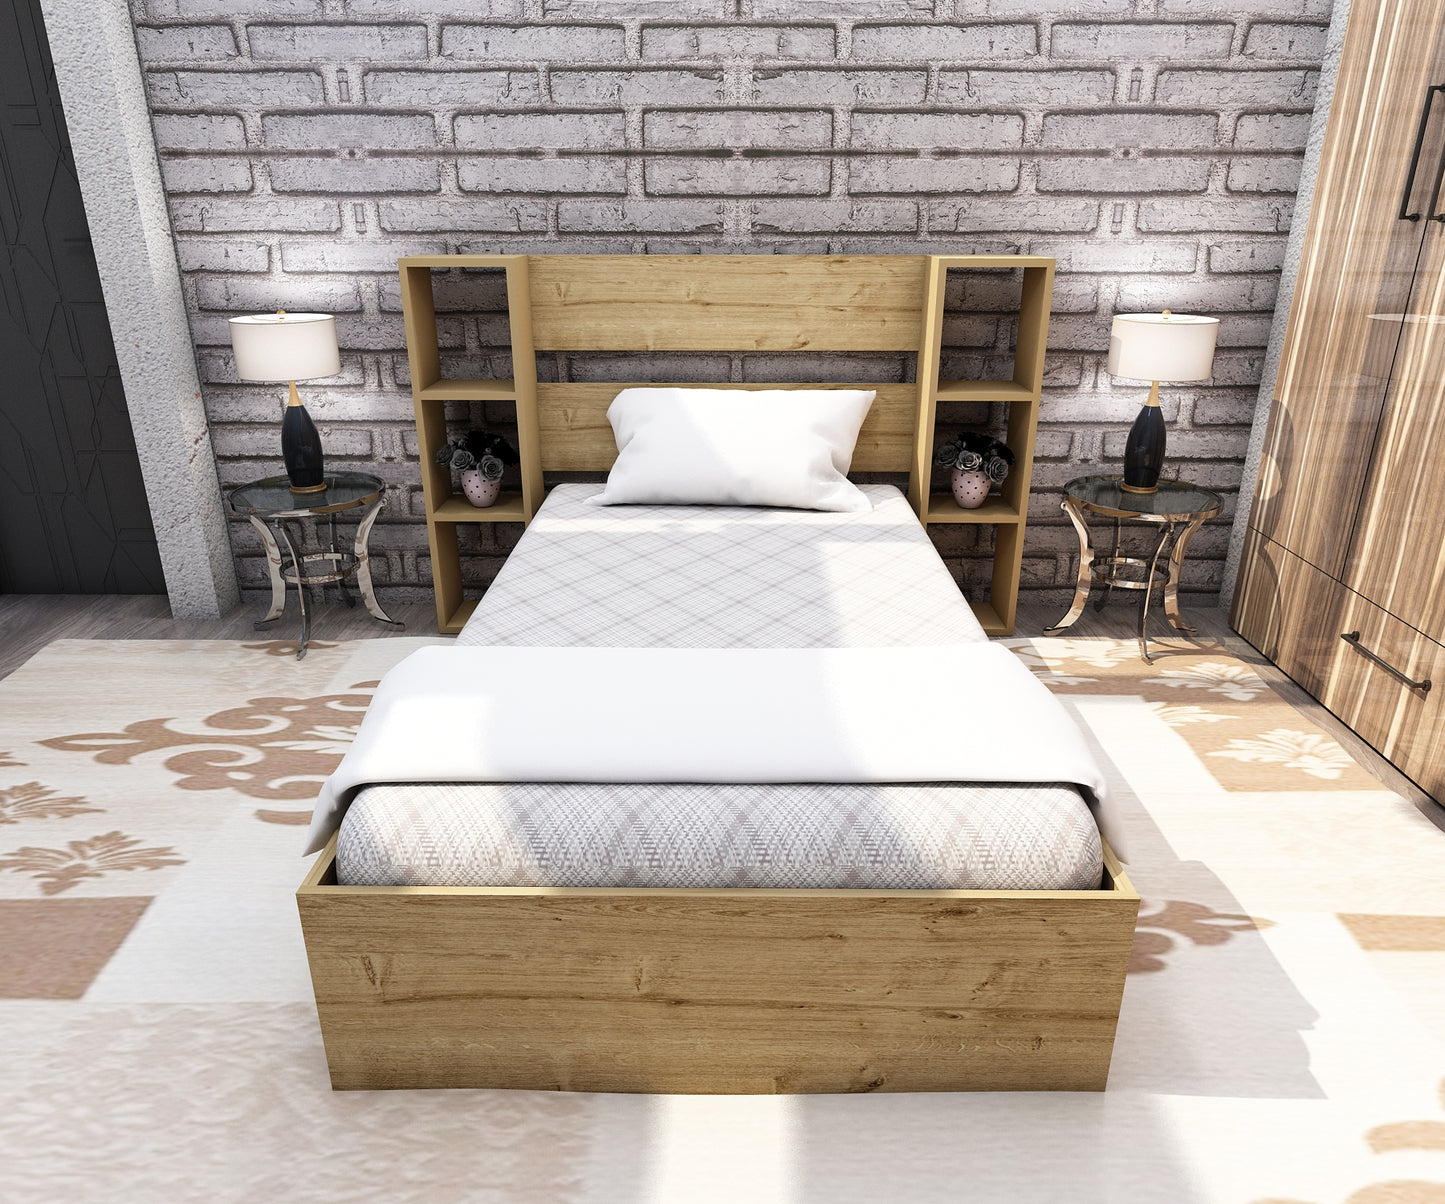 Bedstead Bed Frame with Metal Slats and Storage Shelves Erica